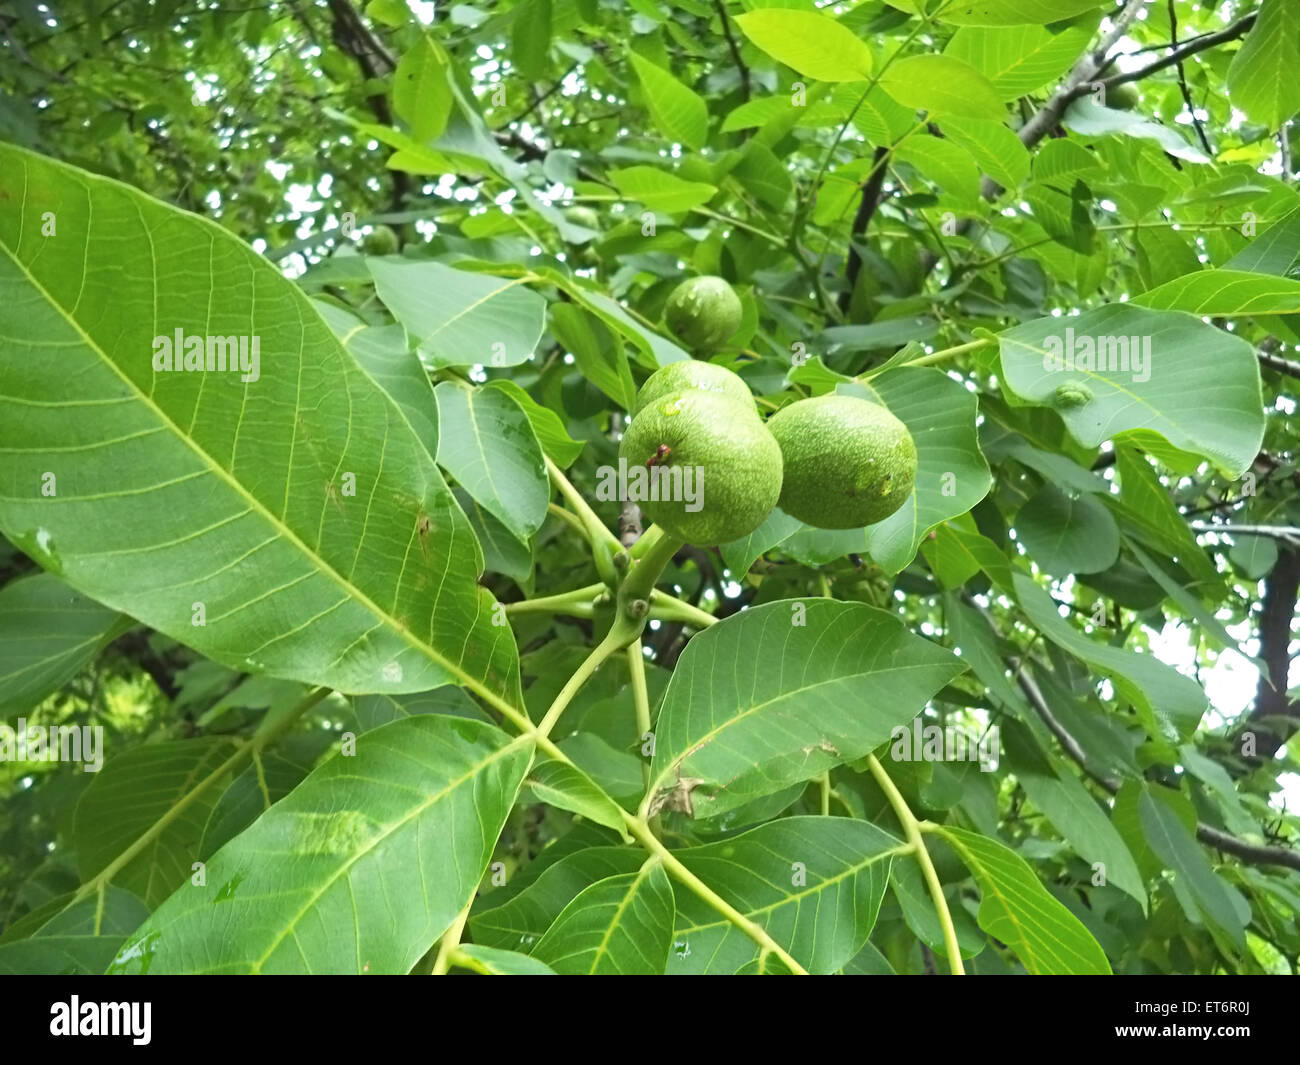 Grünen Nüssen auf dem Baum Stockfotografie - Alamy